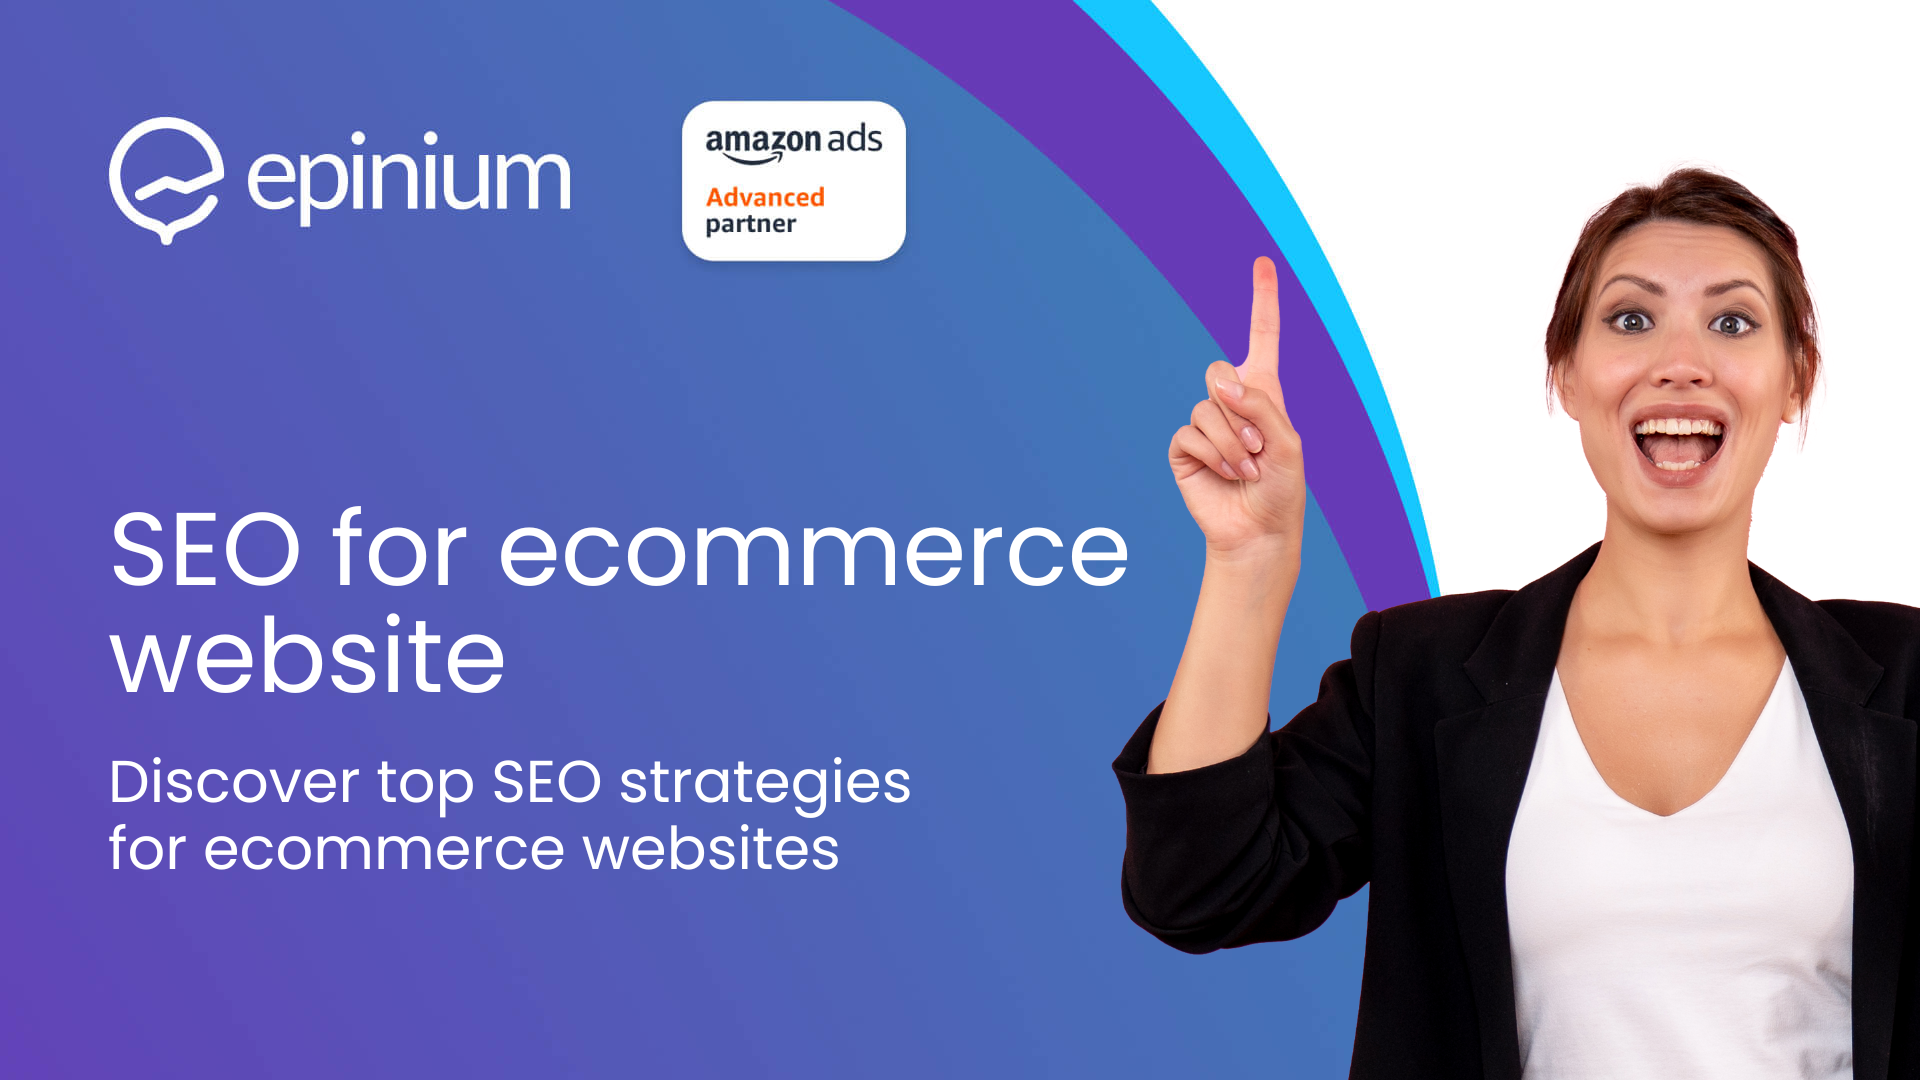 seo for ecommerce website